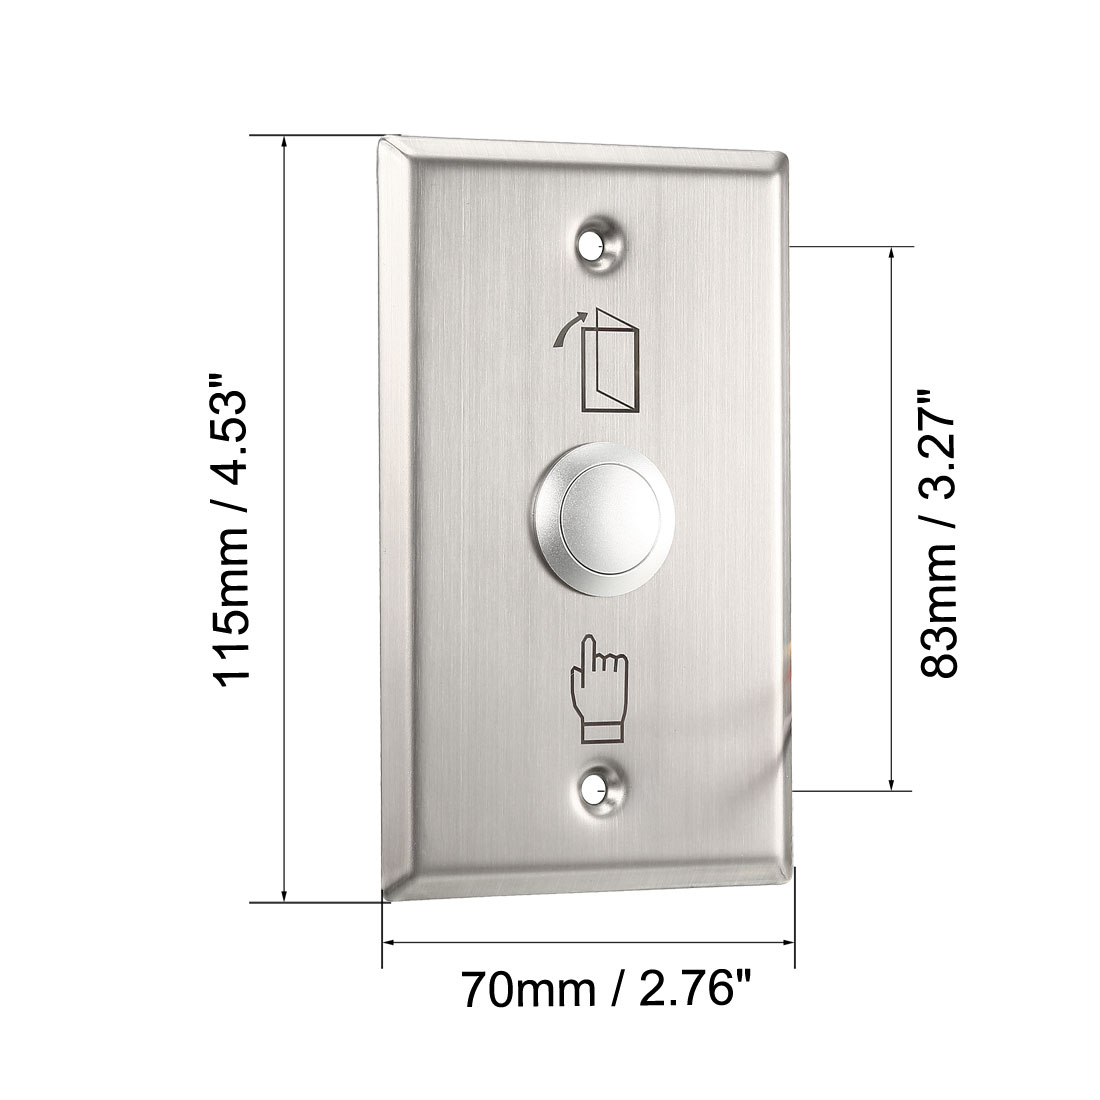 Unique Bargains Door Release Button Push to Exit NO/NC/COM Switch Panel 115mmx70mm 36V 3A